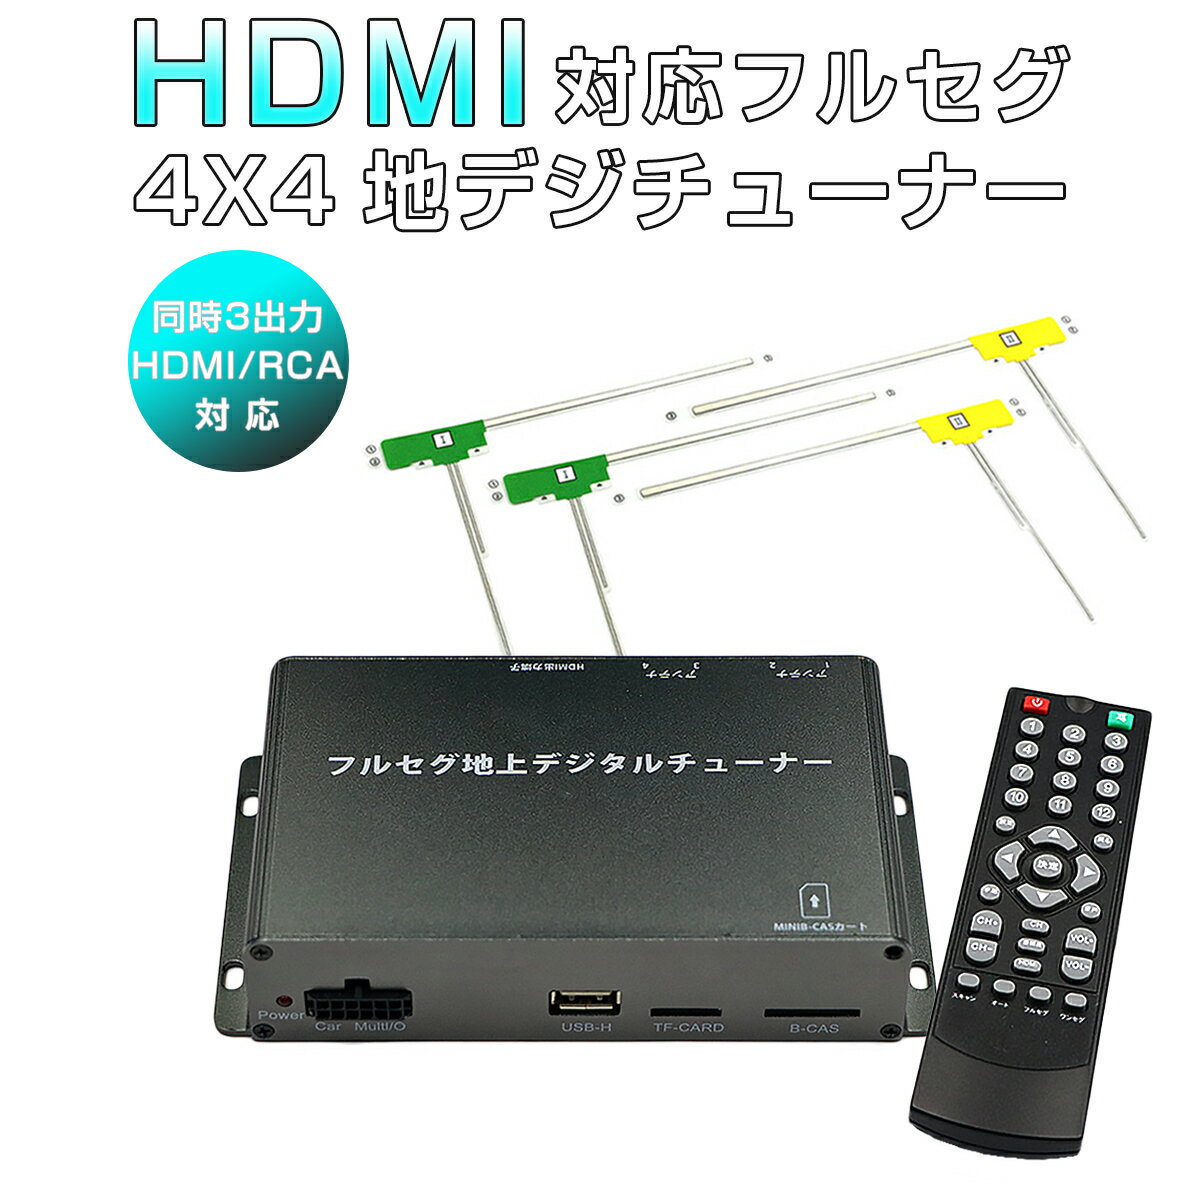 HONDA用の非純正品 ラファーガ 地デジチューナー カーナビ ワンセグ フルセグ HDMI 4x4 高性能 4チューナー 4アンテナ 自動切換 150km/hまで受信 高画質 古い車載TVやカーナビにも使える 12V/24V フィルムアンテナ miniB-CASカード付き 6ヶ月保証